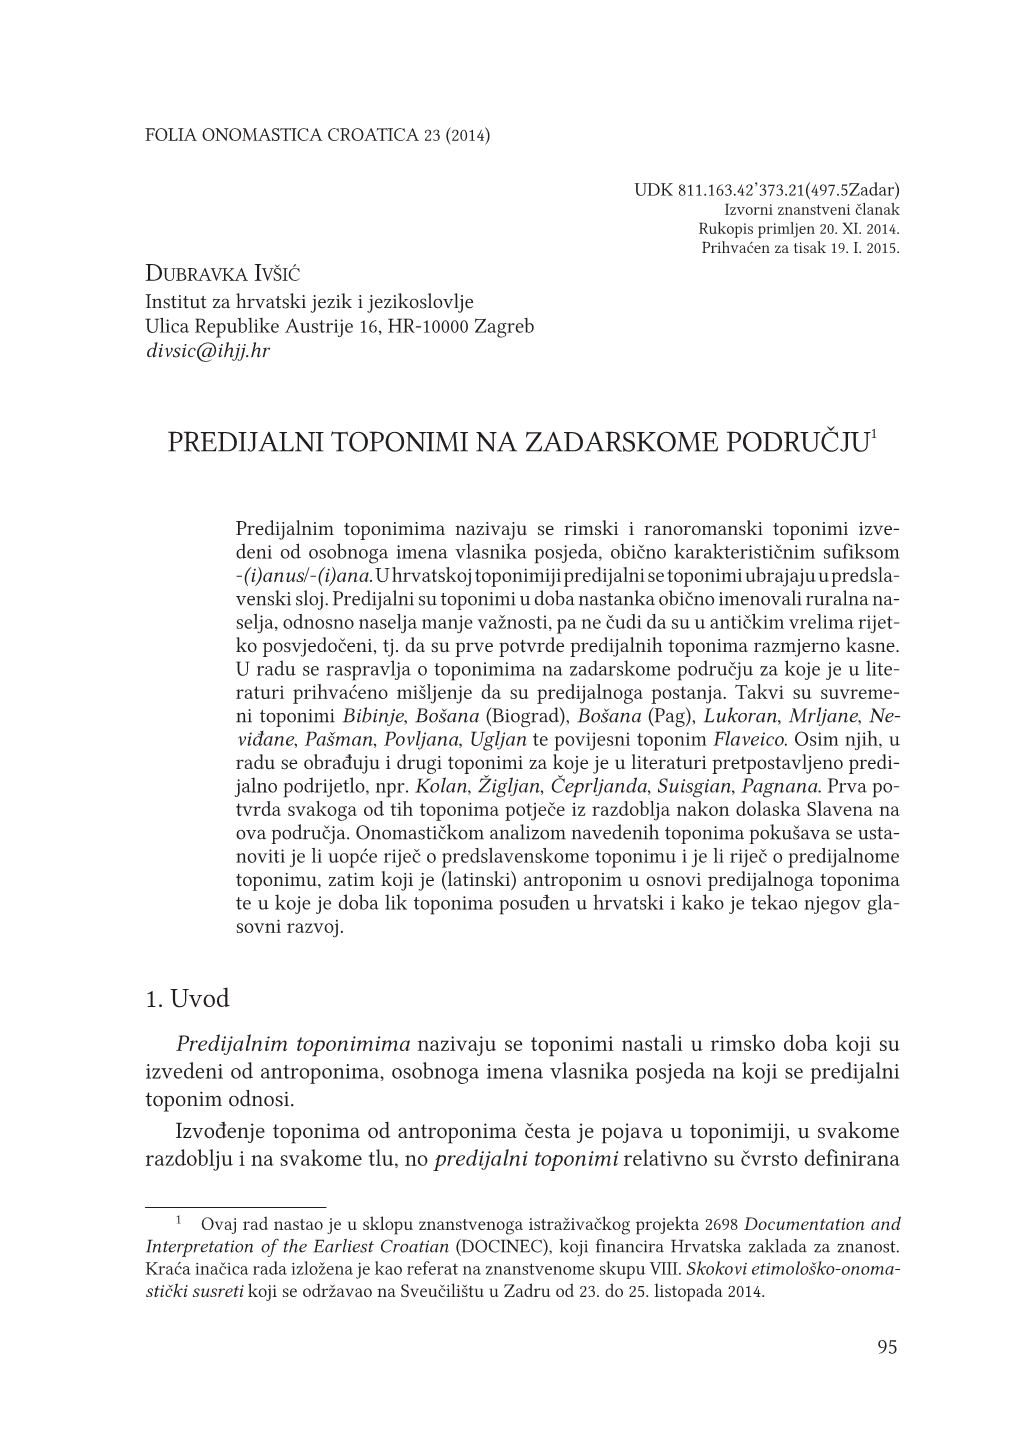 Predijalni Toponimi Na Zadarskome Području1